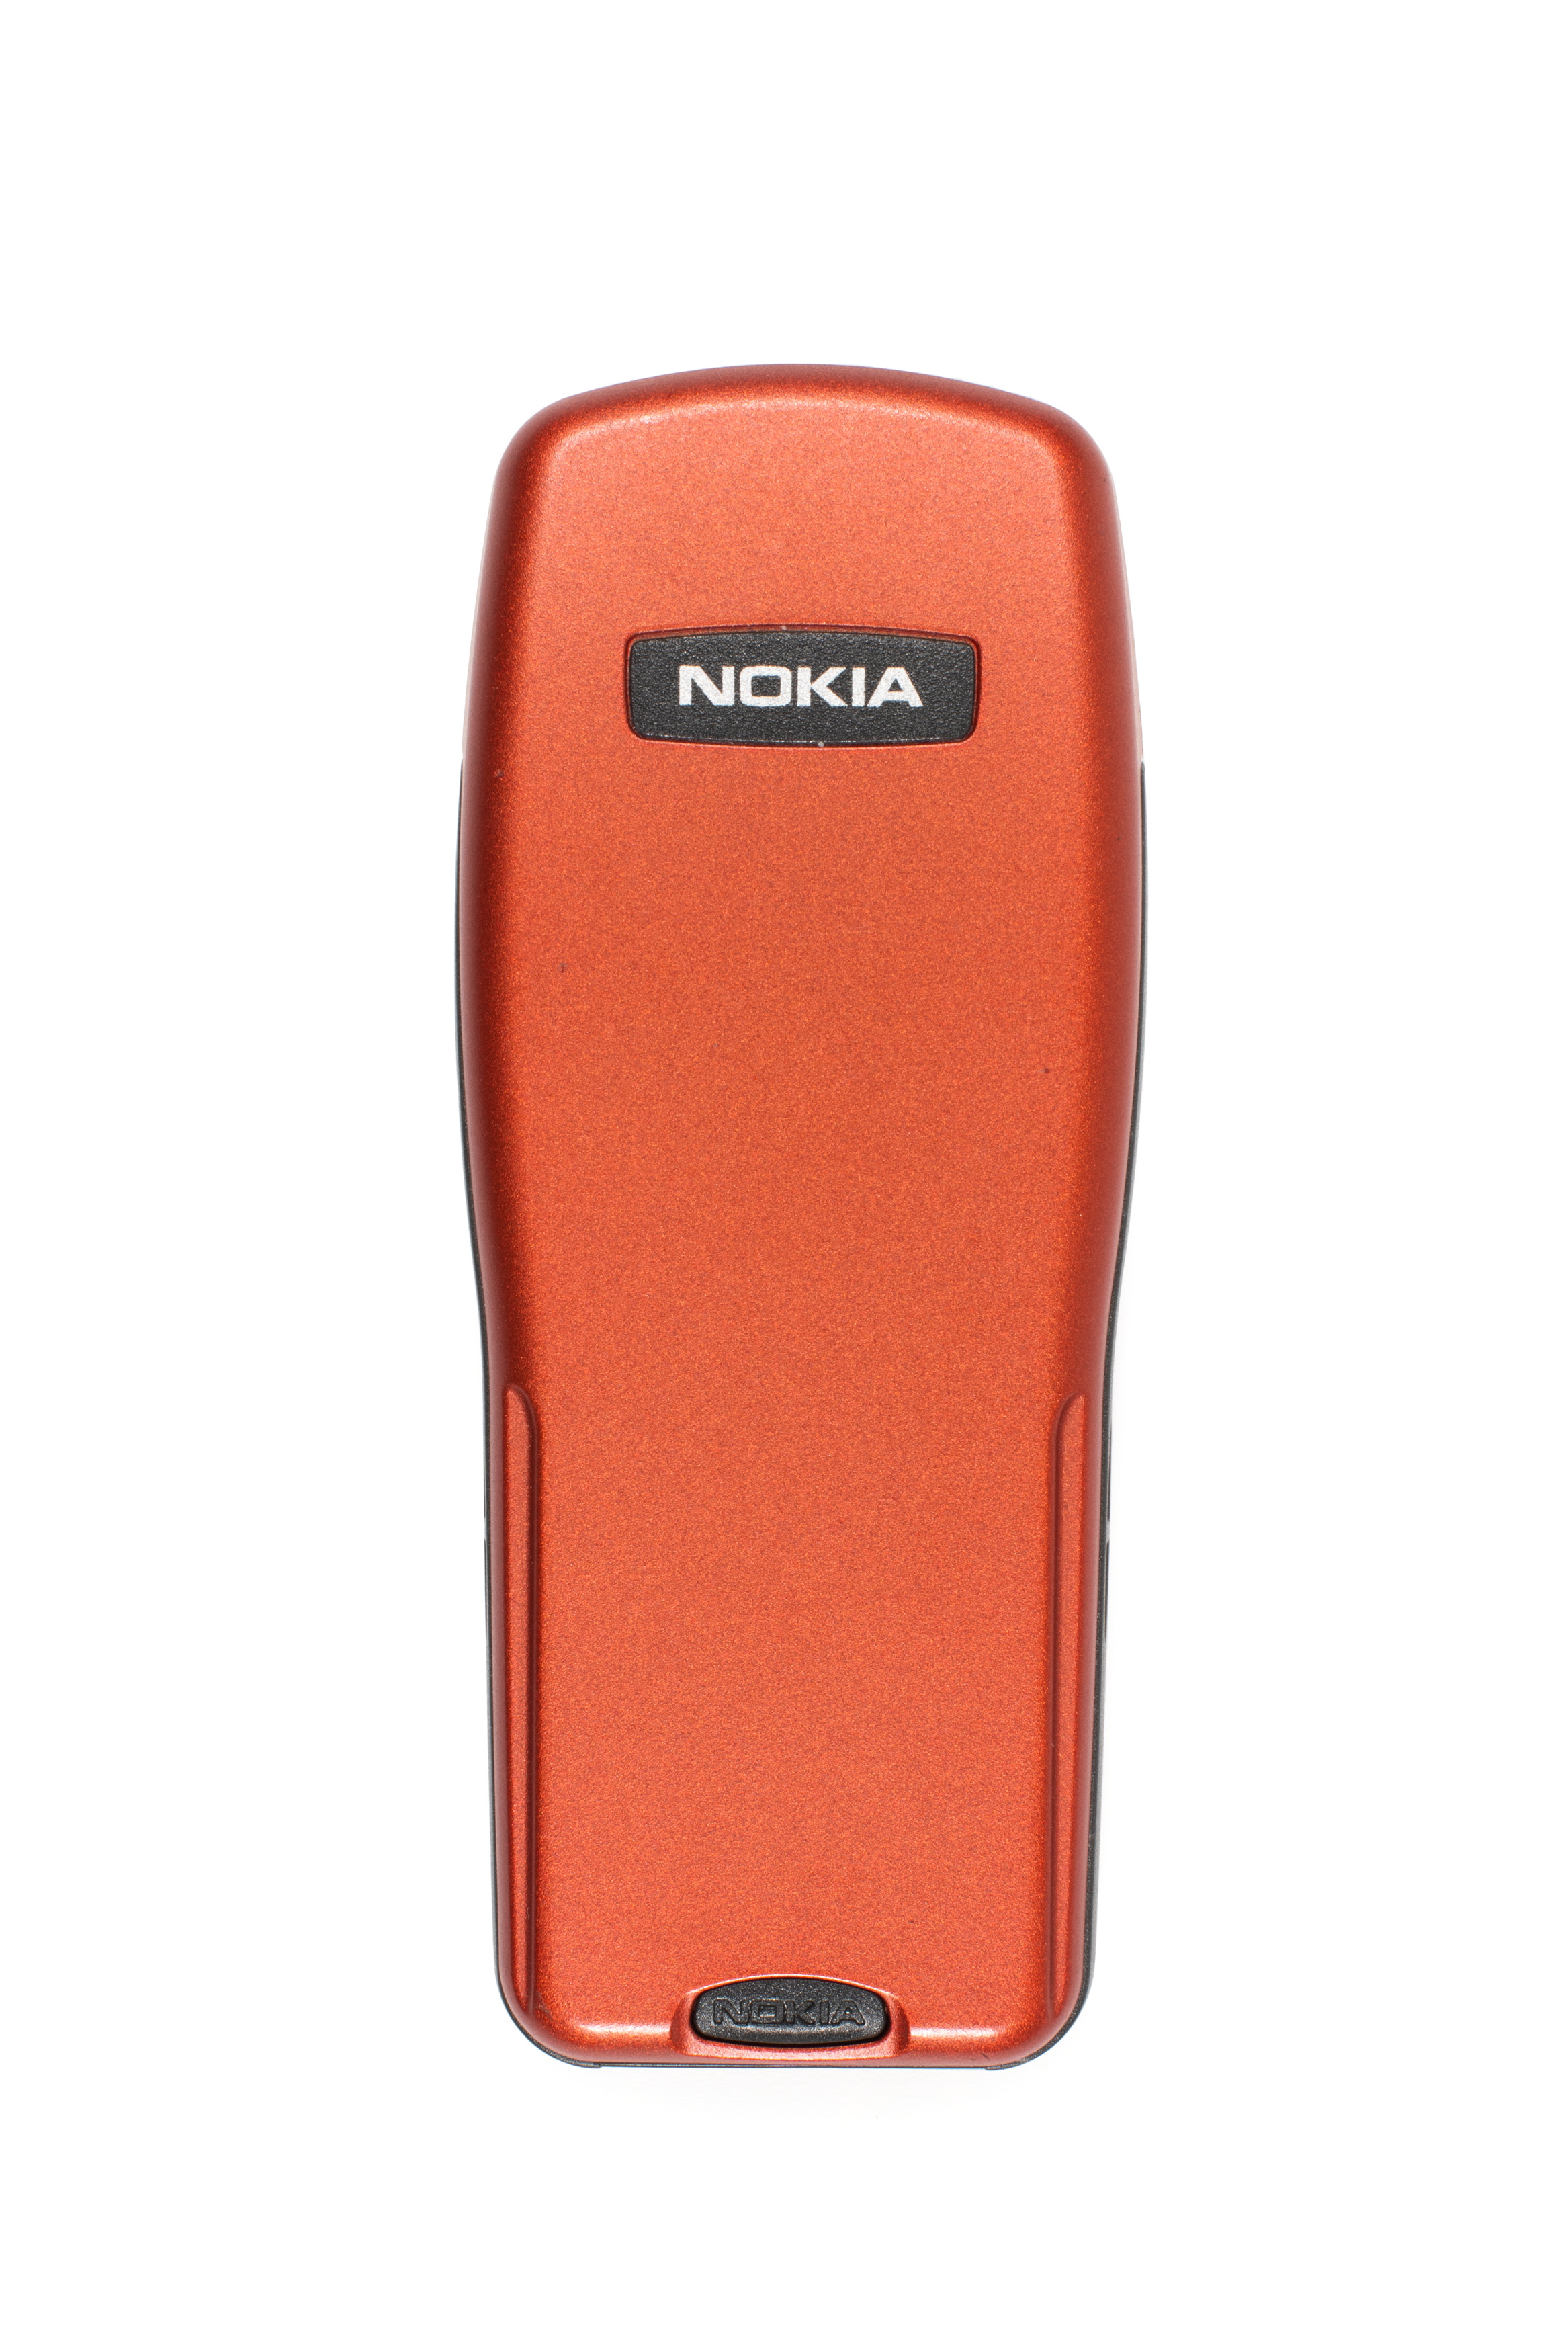 '3210' model Nokia mobile telephone